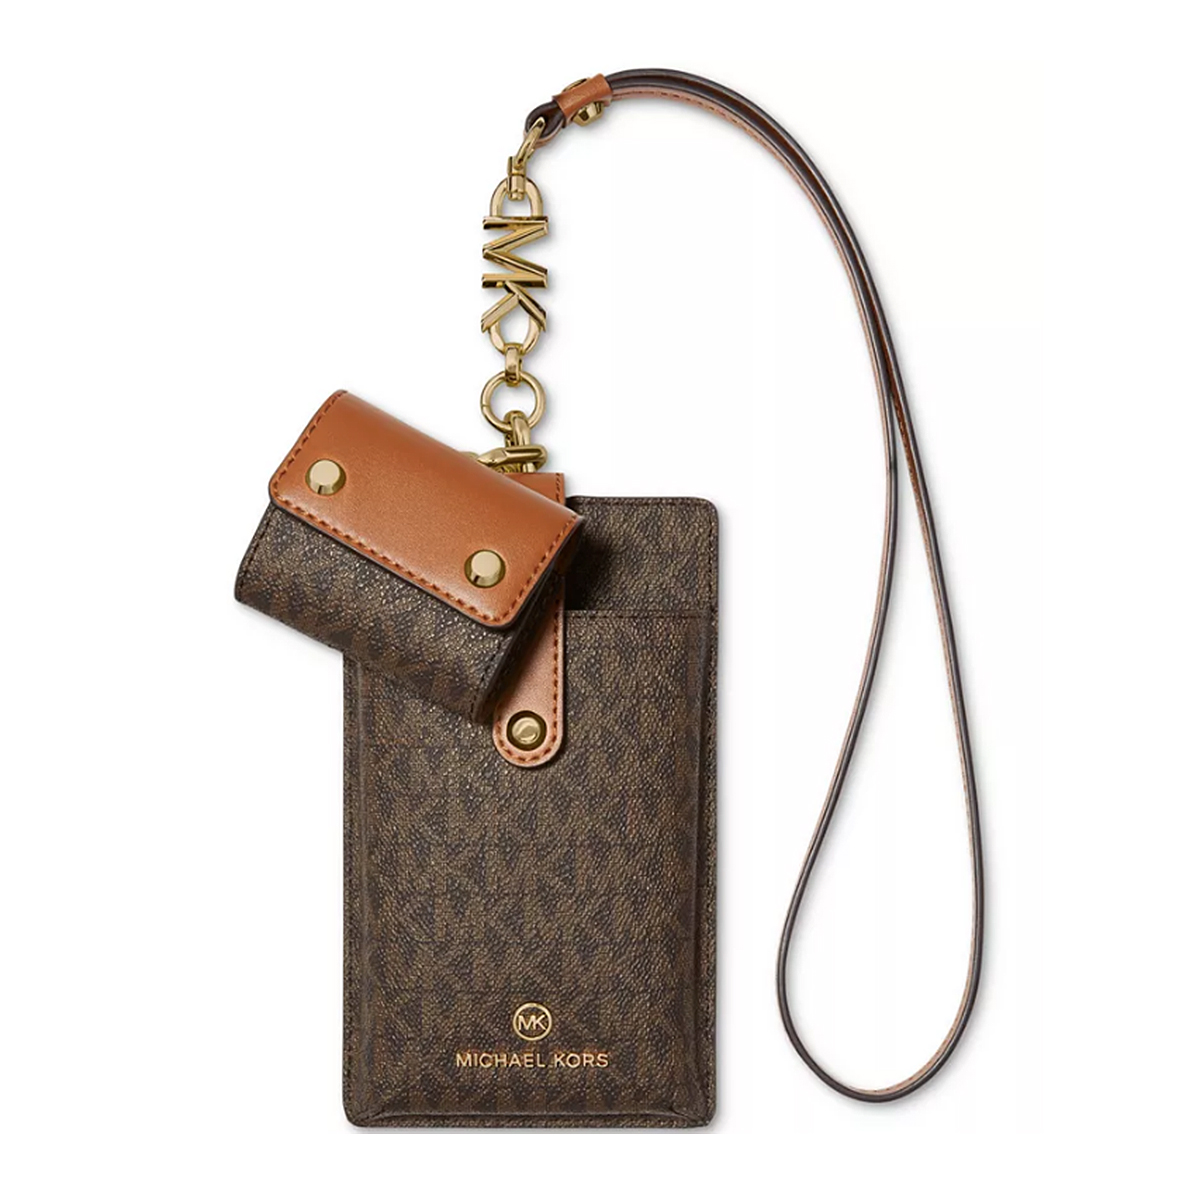 Michael Kors Handbags At Macy's On Sale | semashow.com